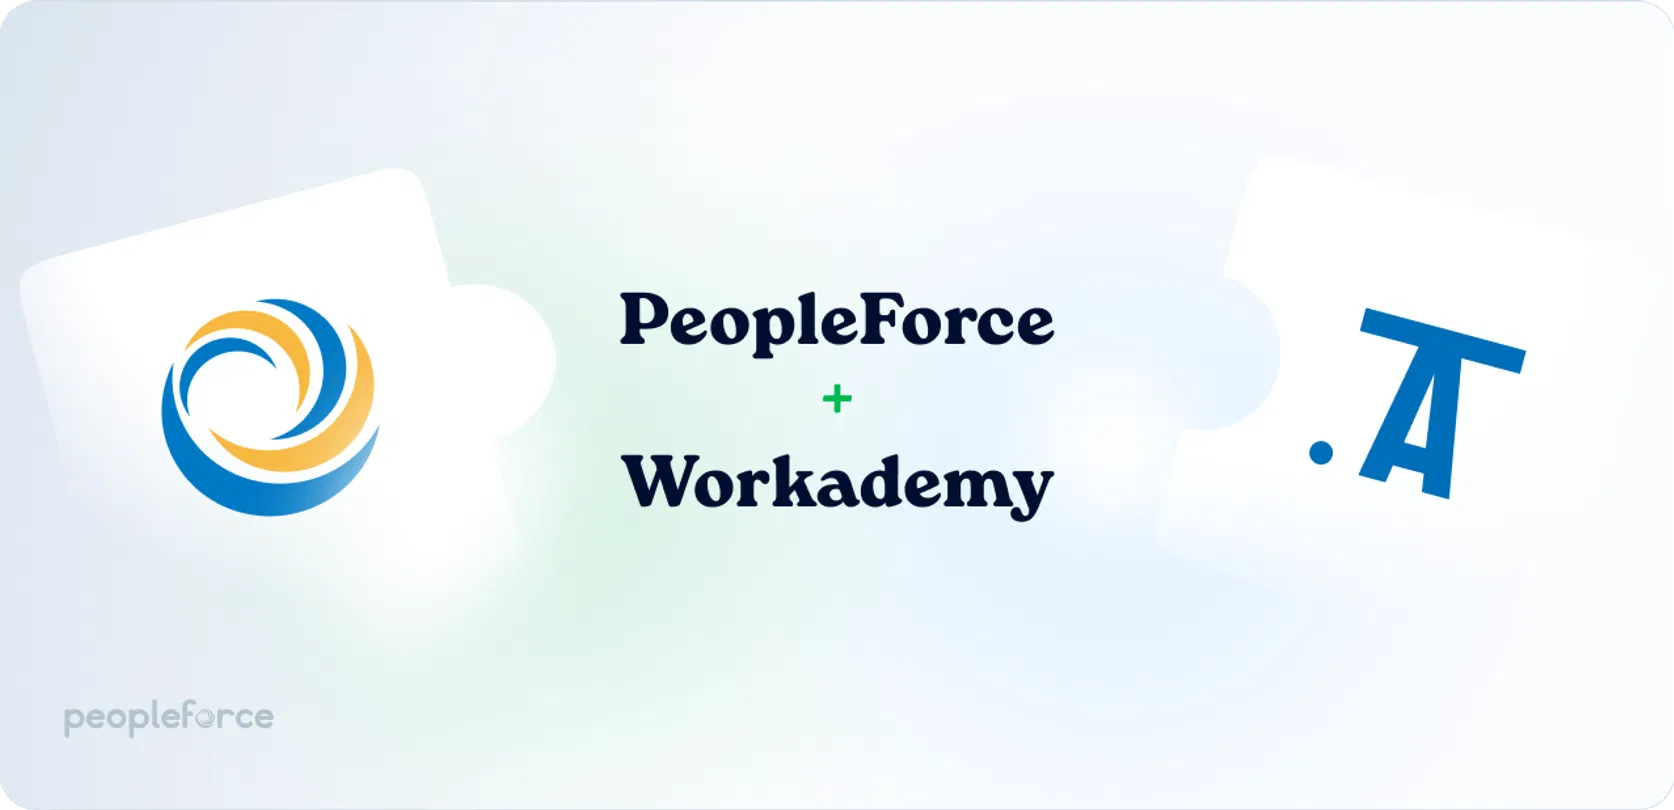 Workademy integration for PeopleForce